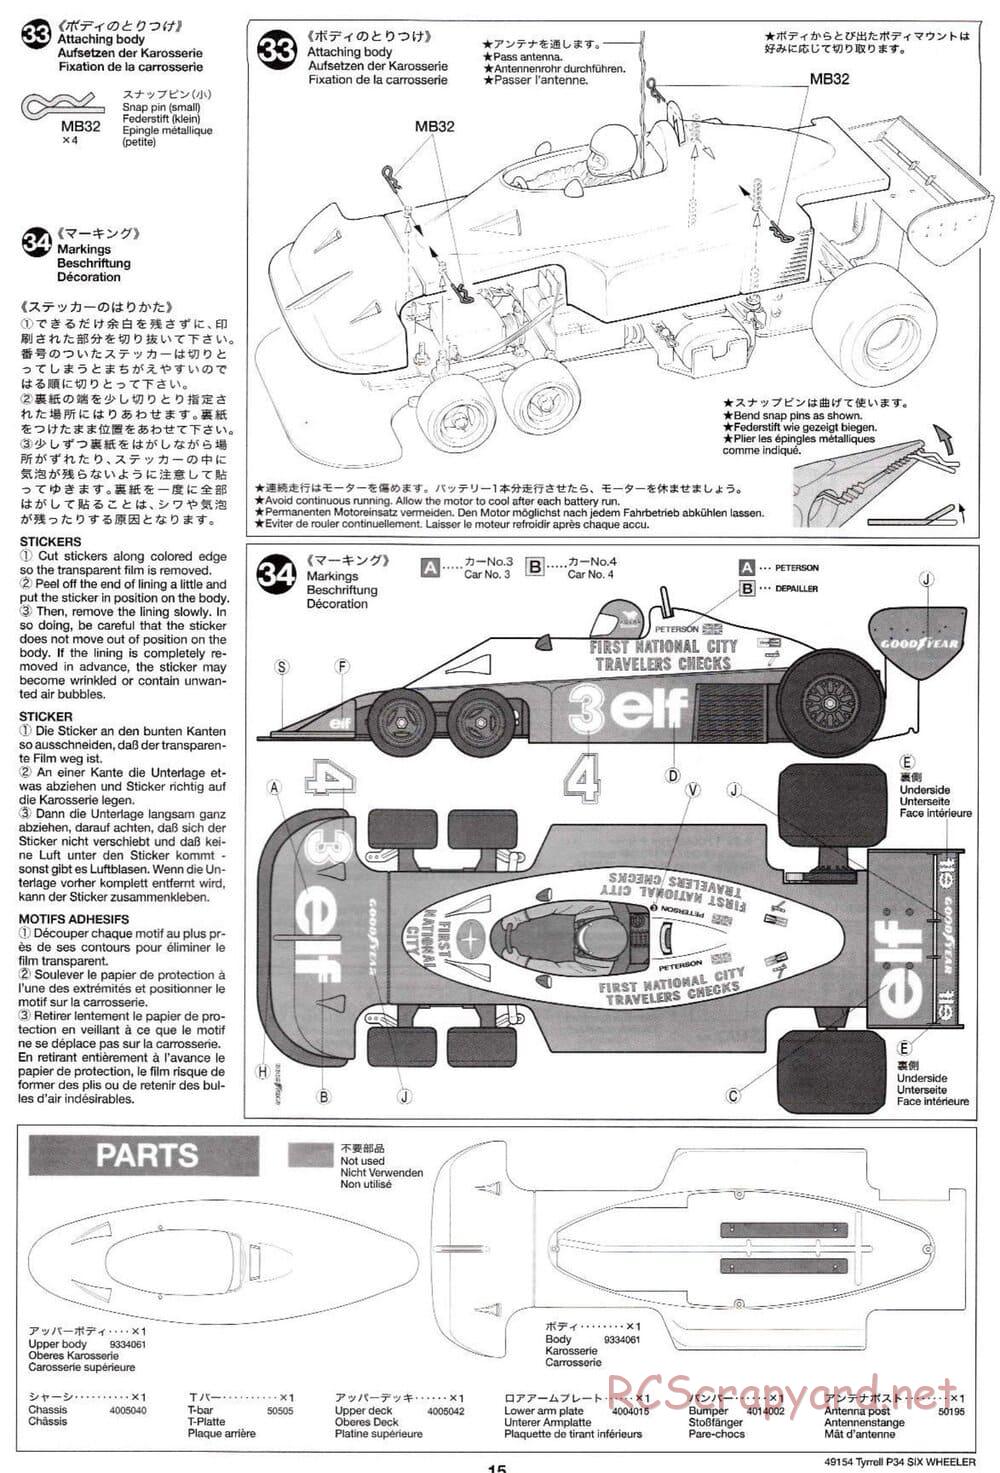 Tamiya - Tyrrell P34 Six Wheeler - F103-6W Chassis - Manual - Page 15